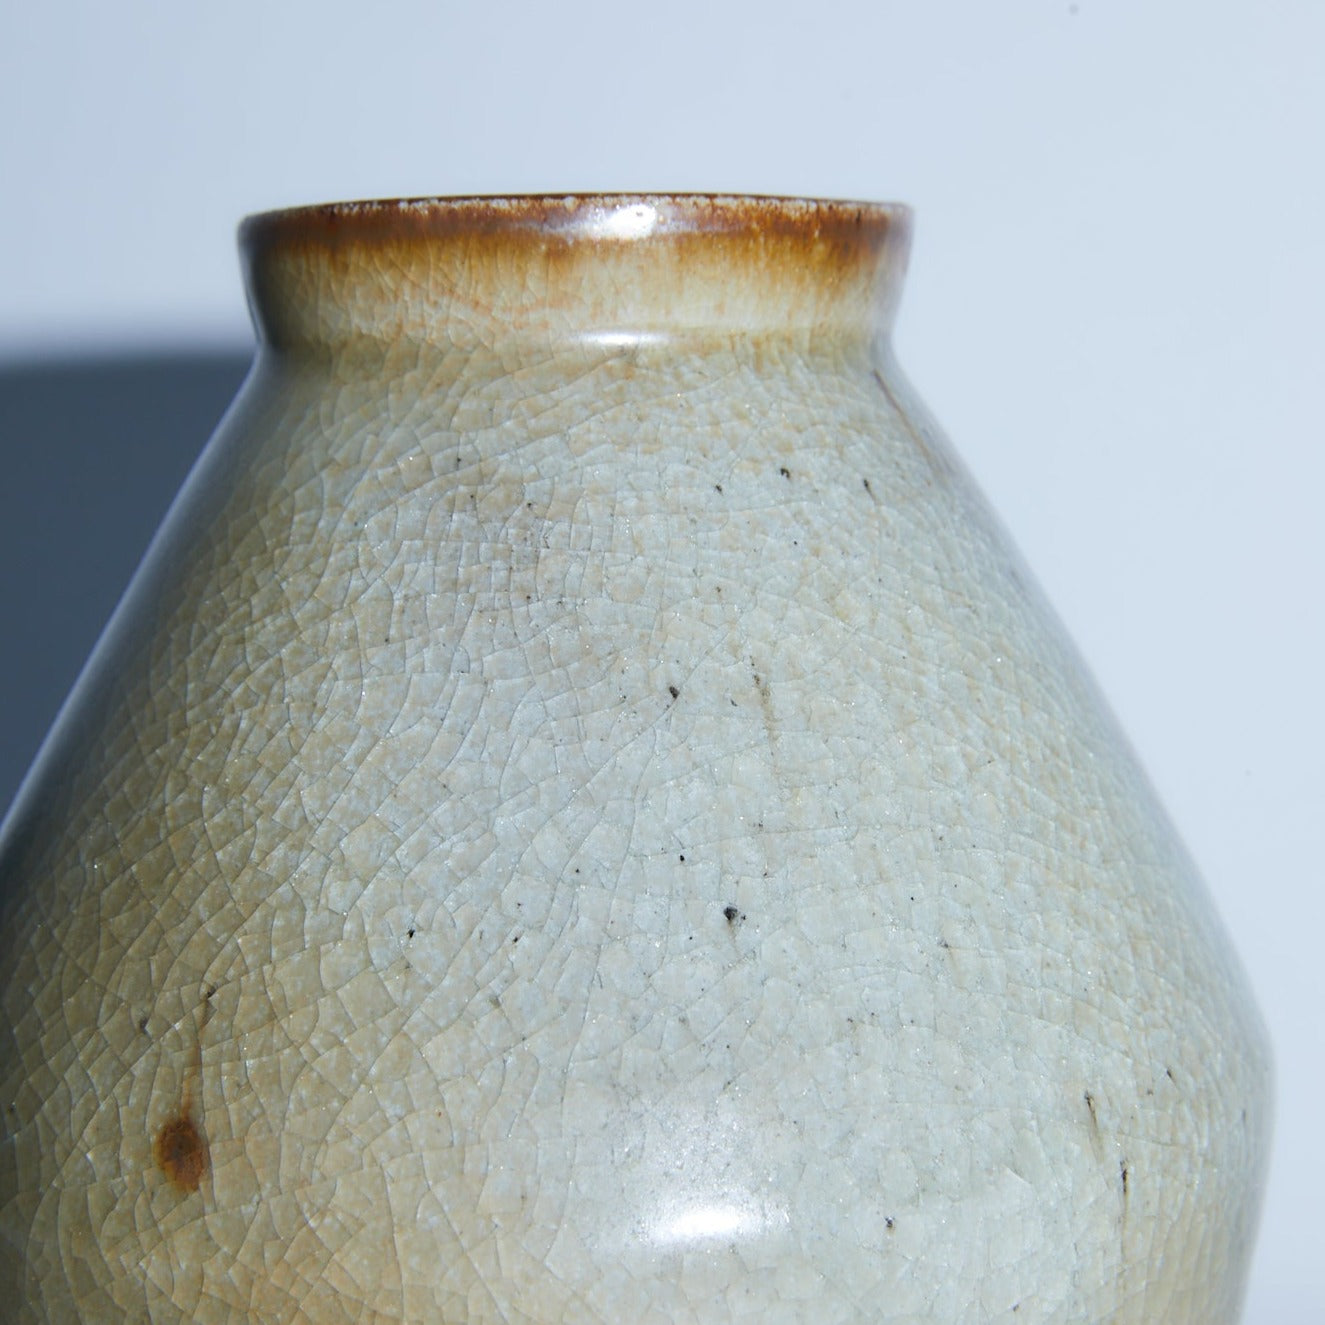 Iris Vase | Braer Studio Pottery Vase 